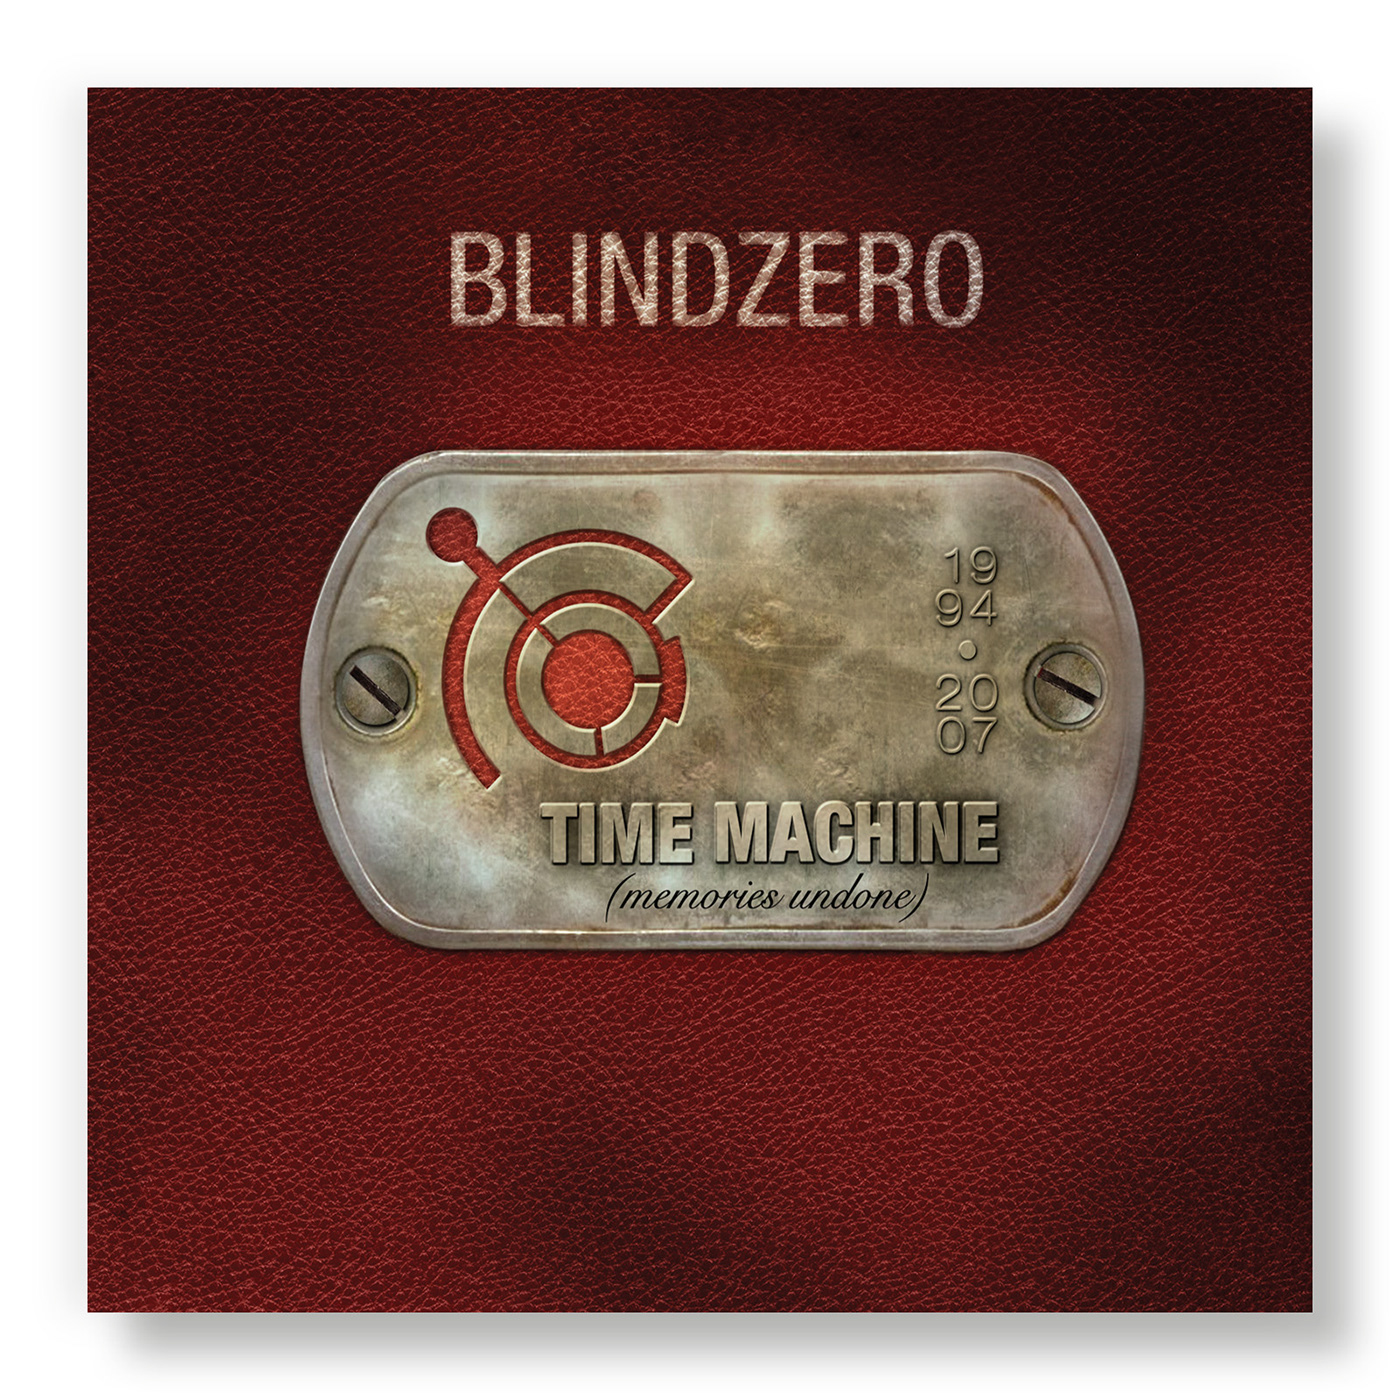 blind zero album artwork cover design leiria Portugal